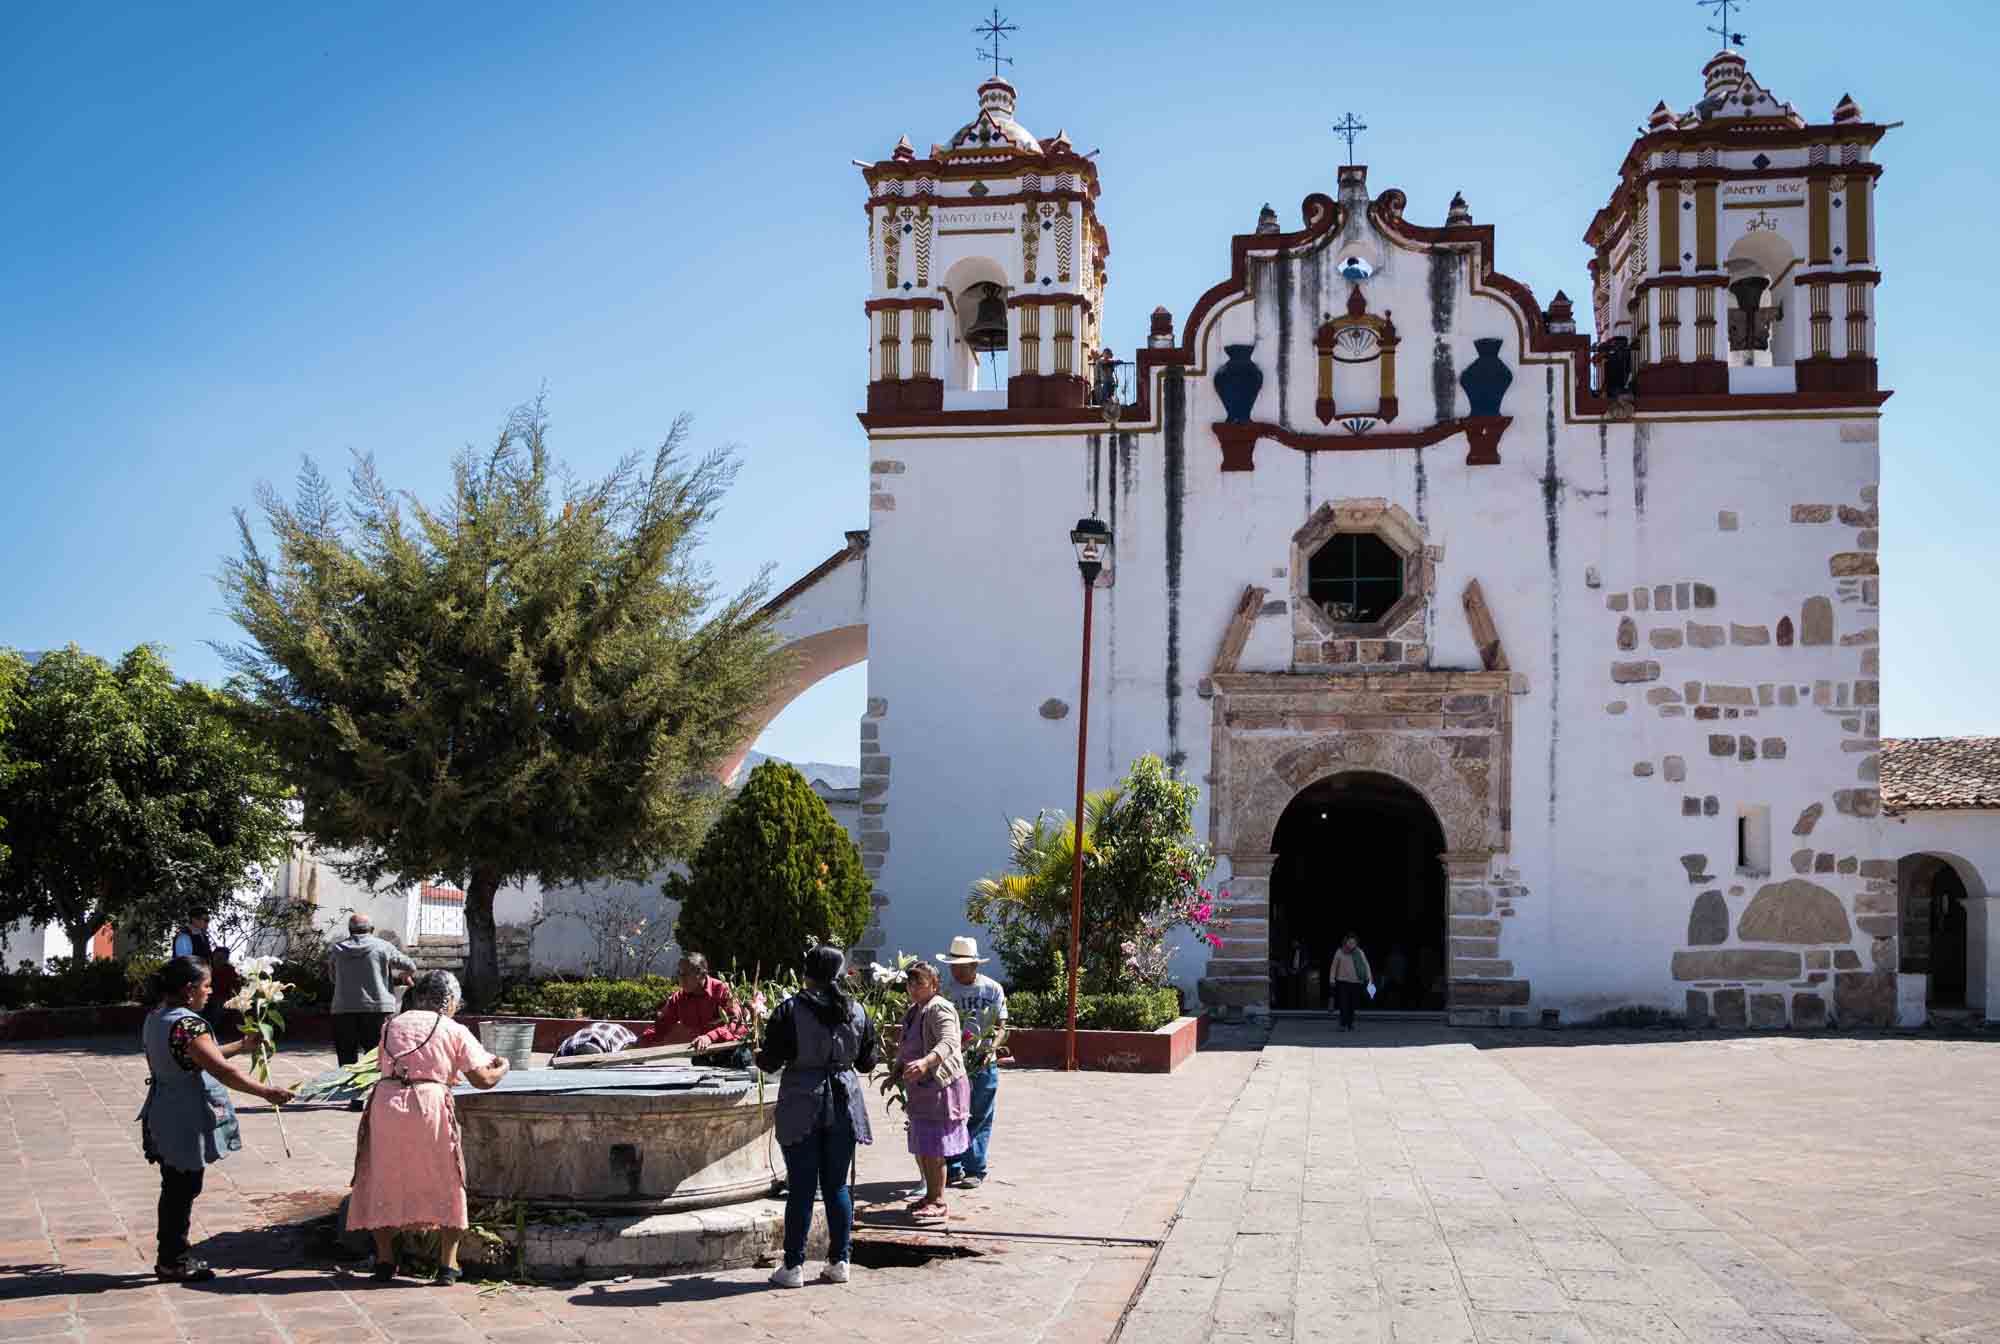 People preparing flowers outside a church in Teotitlan del Valle